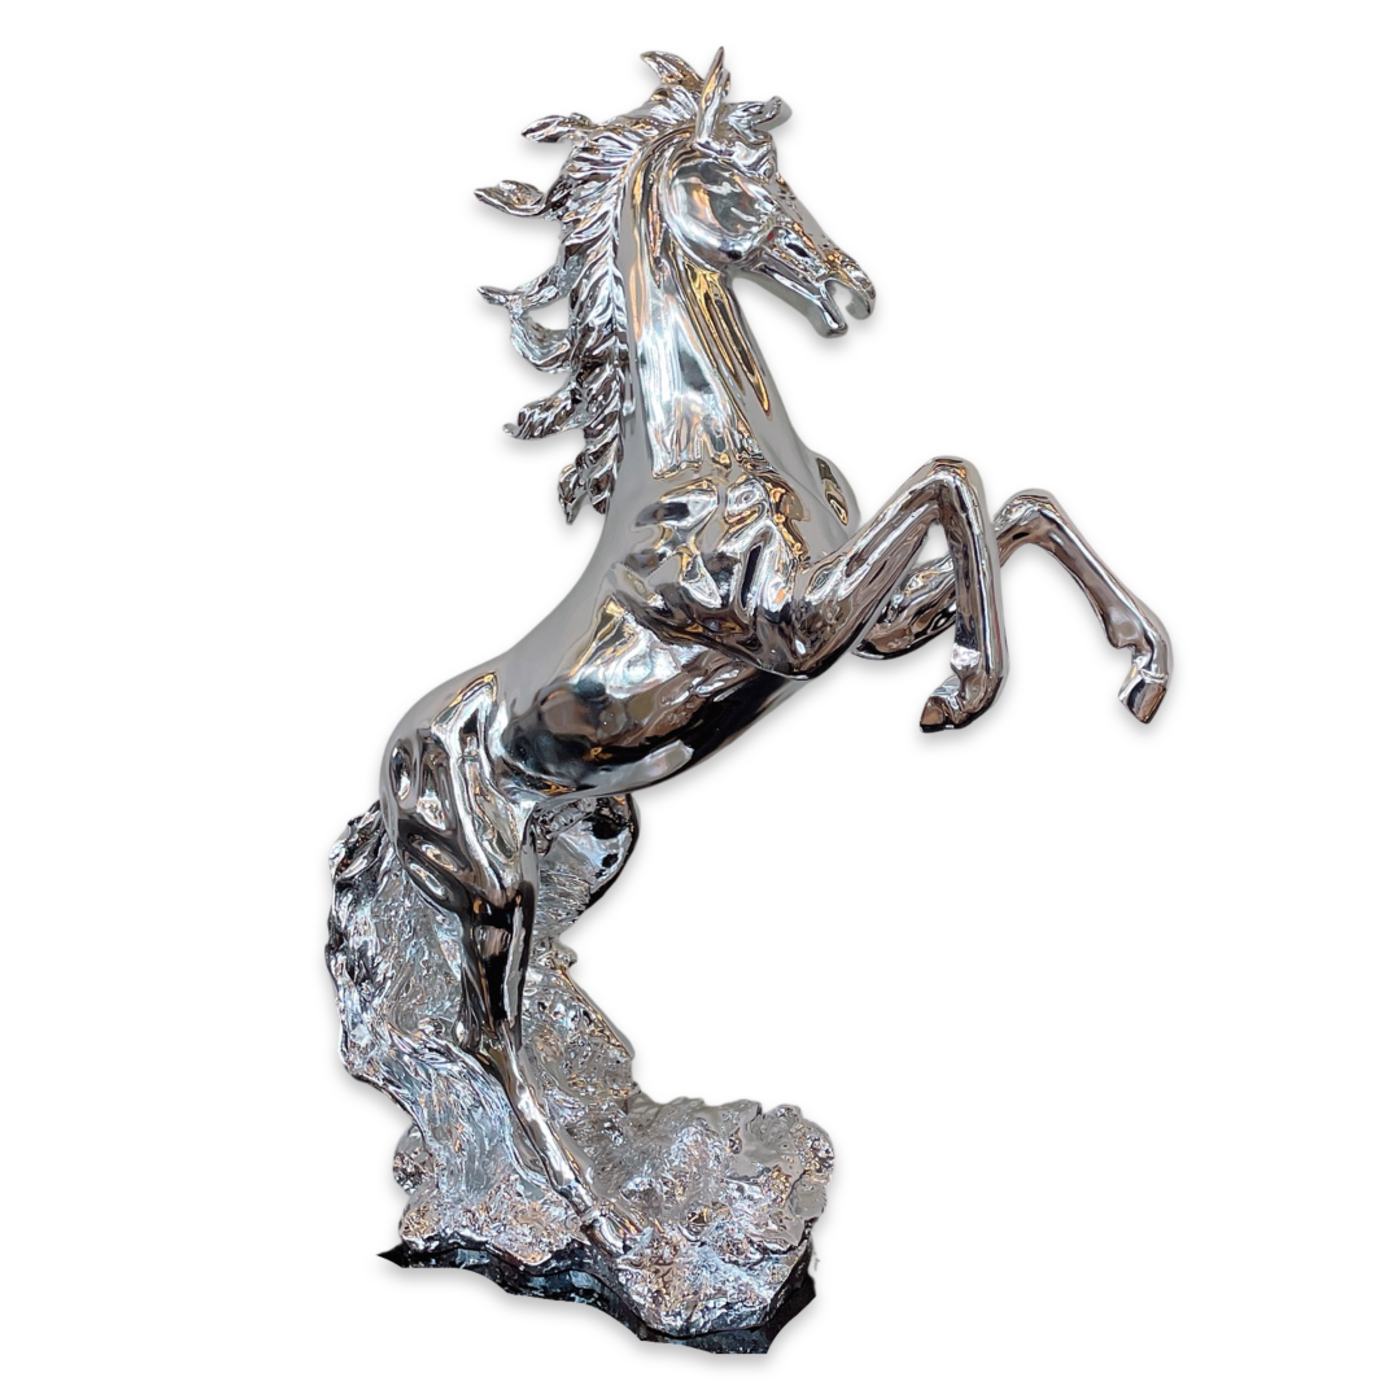 Silver Stallion Sculpture - LRG